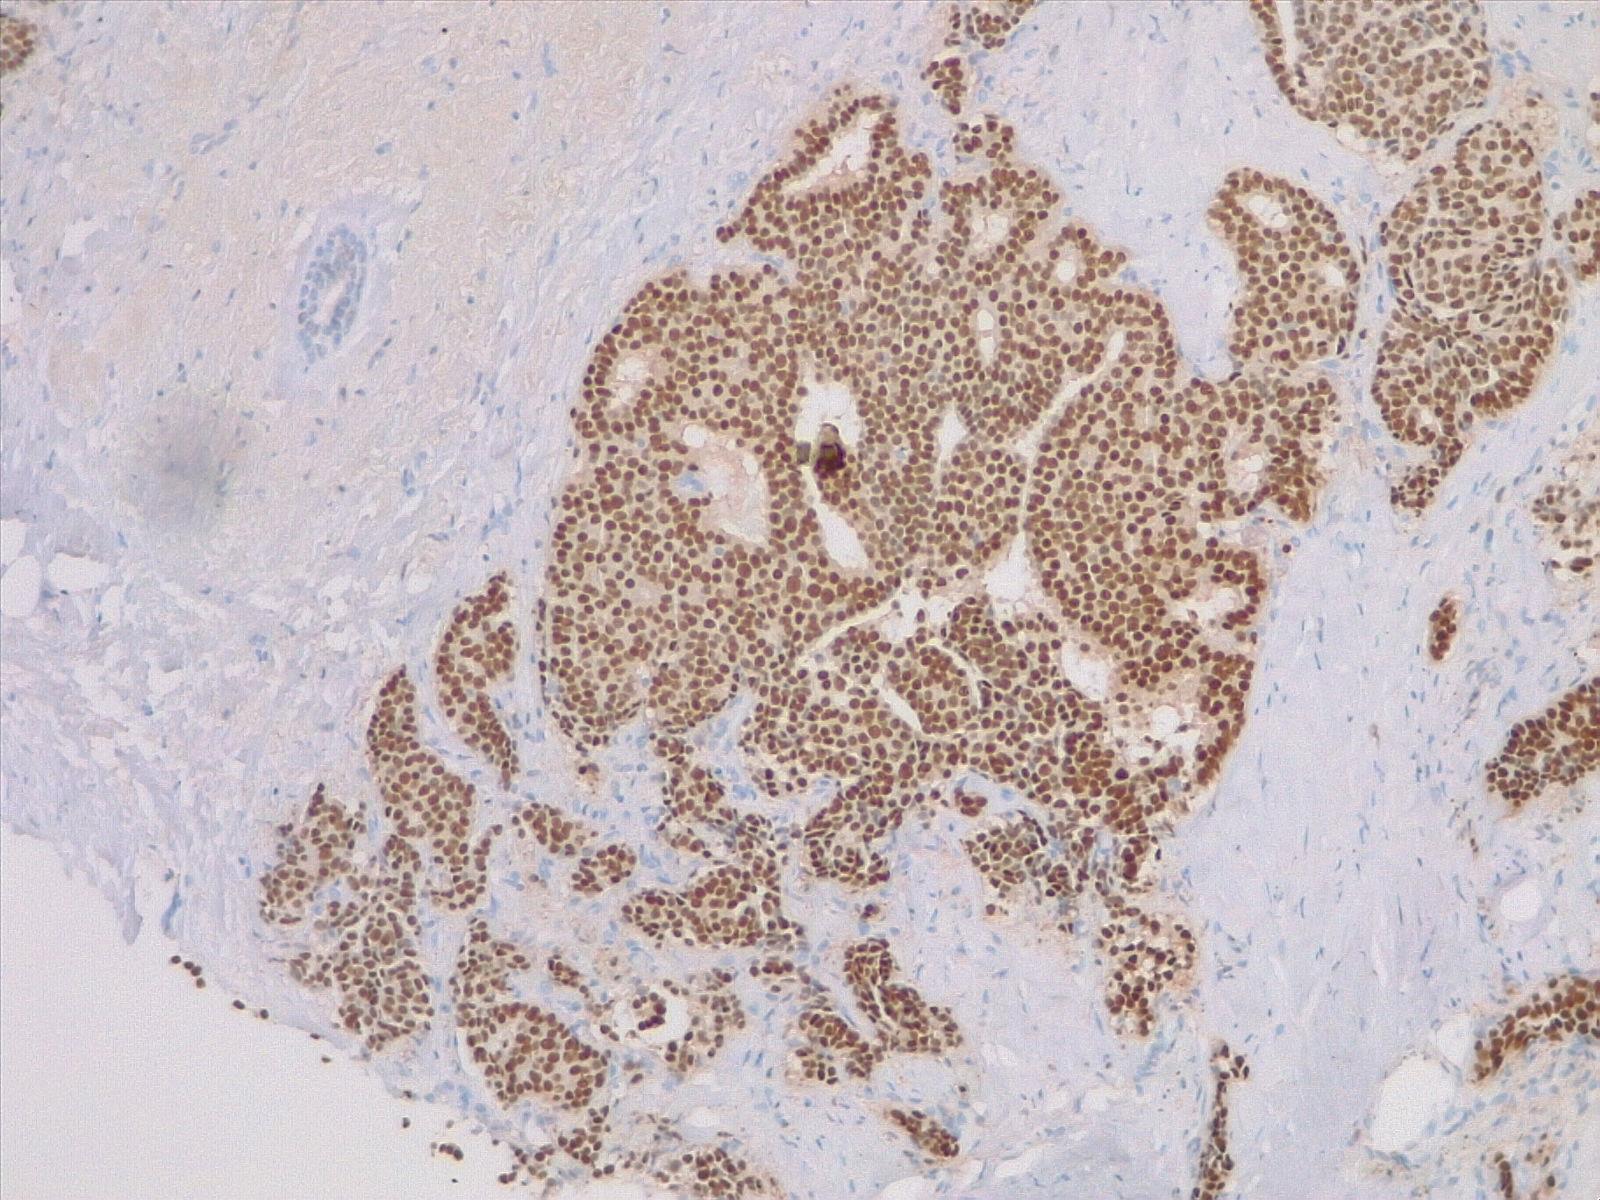 Estrogen receptor expression in breast carcinoma, ER stain 4x